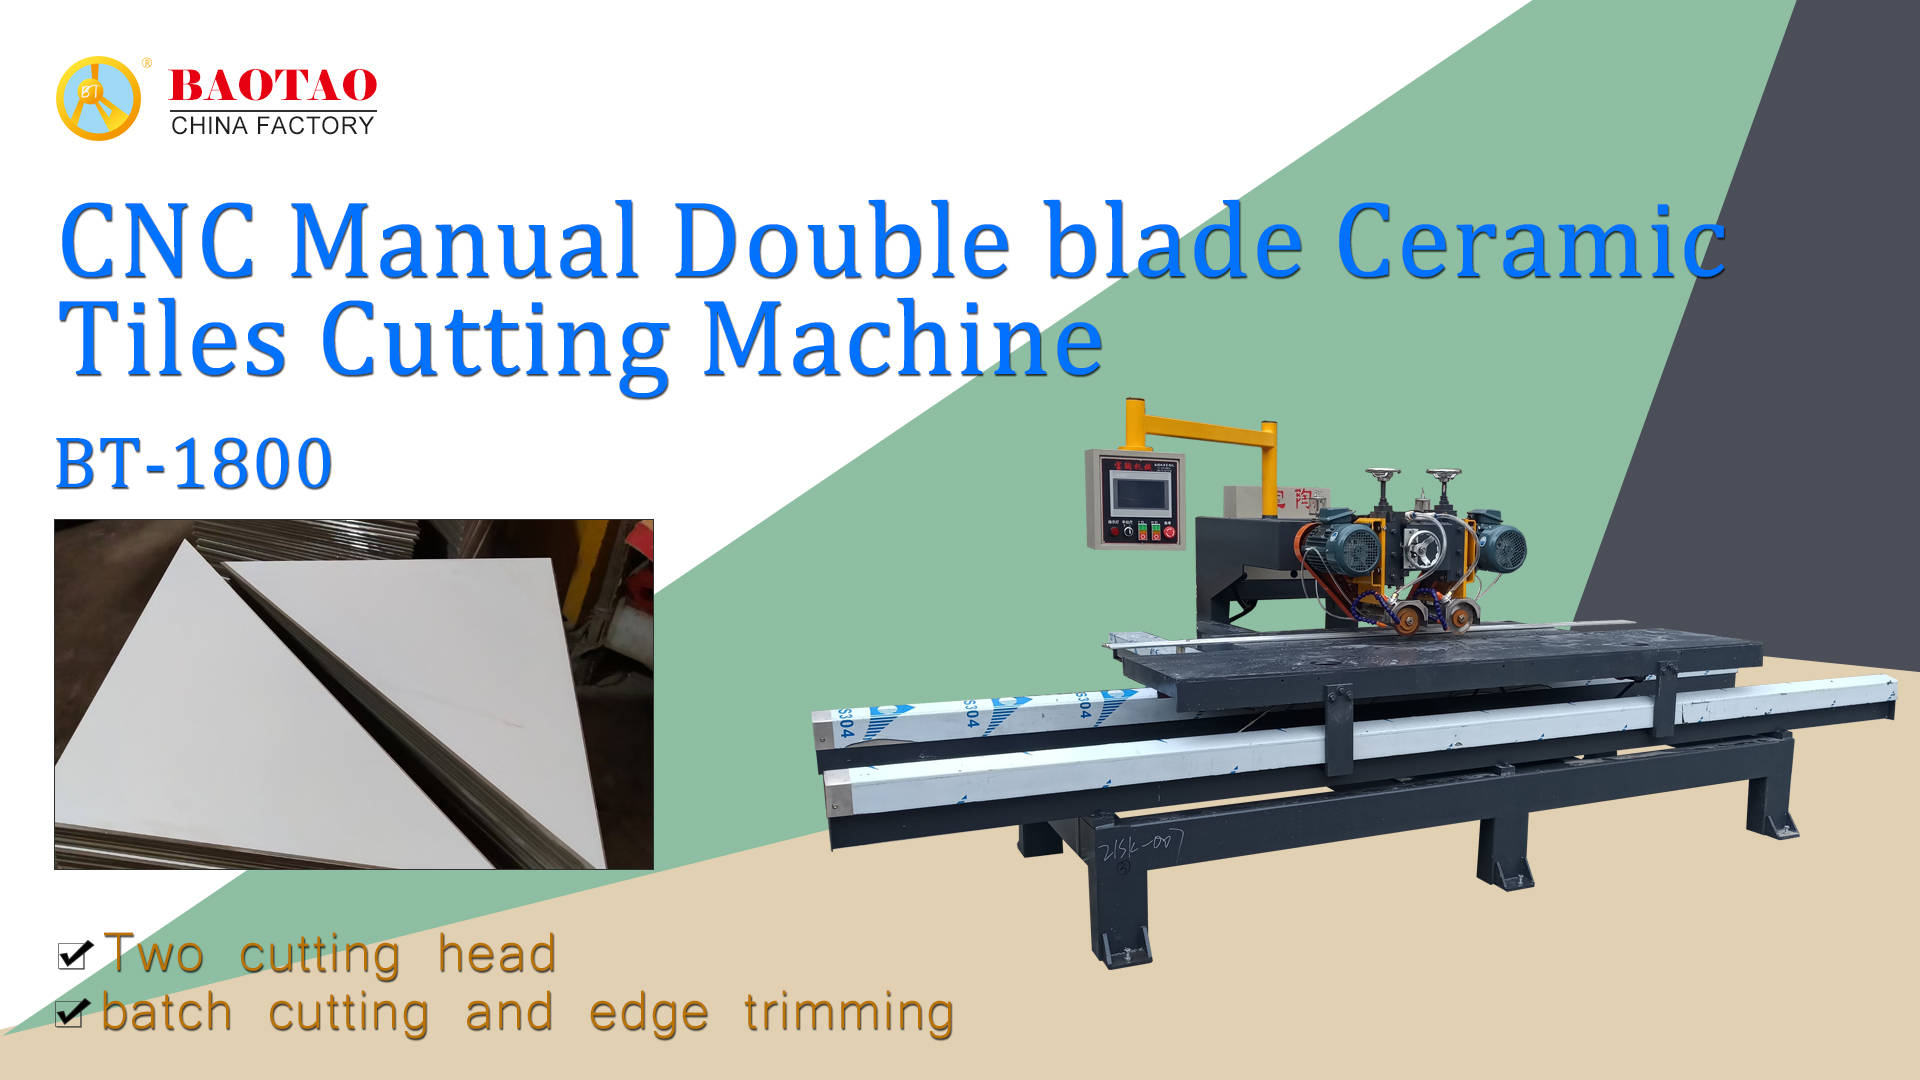 Baotao 1800 Hand push CNC double-blade cutting machine